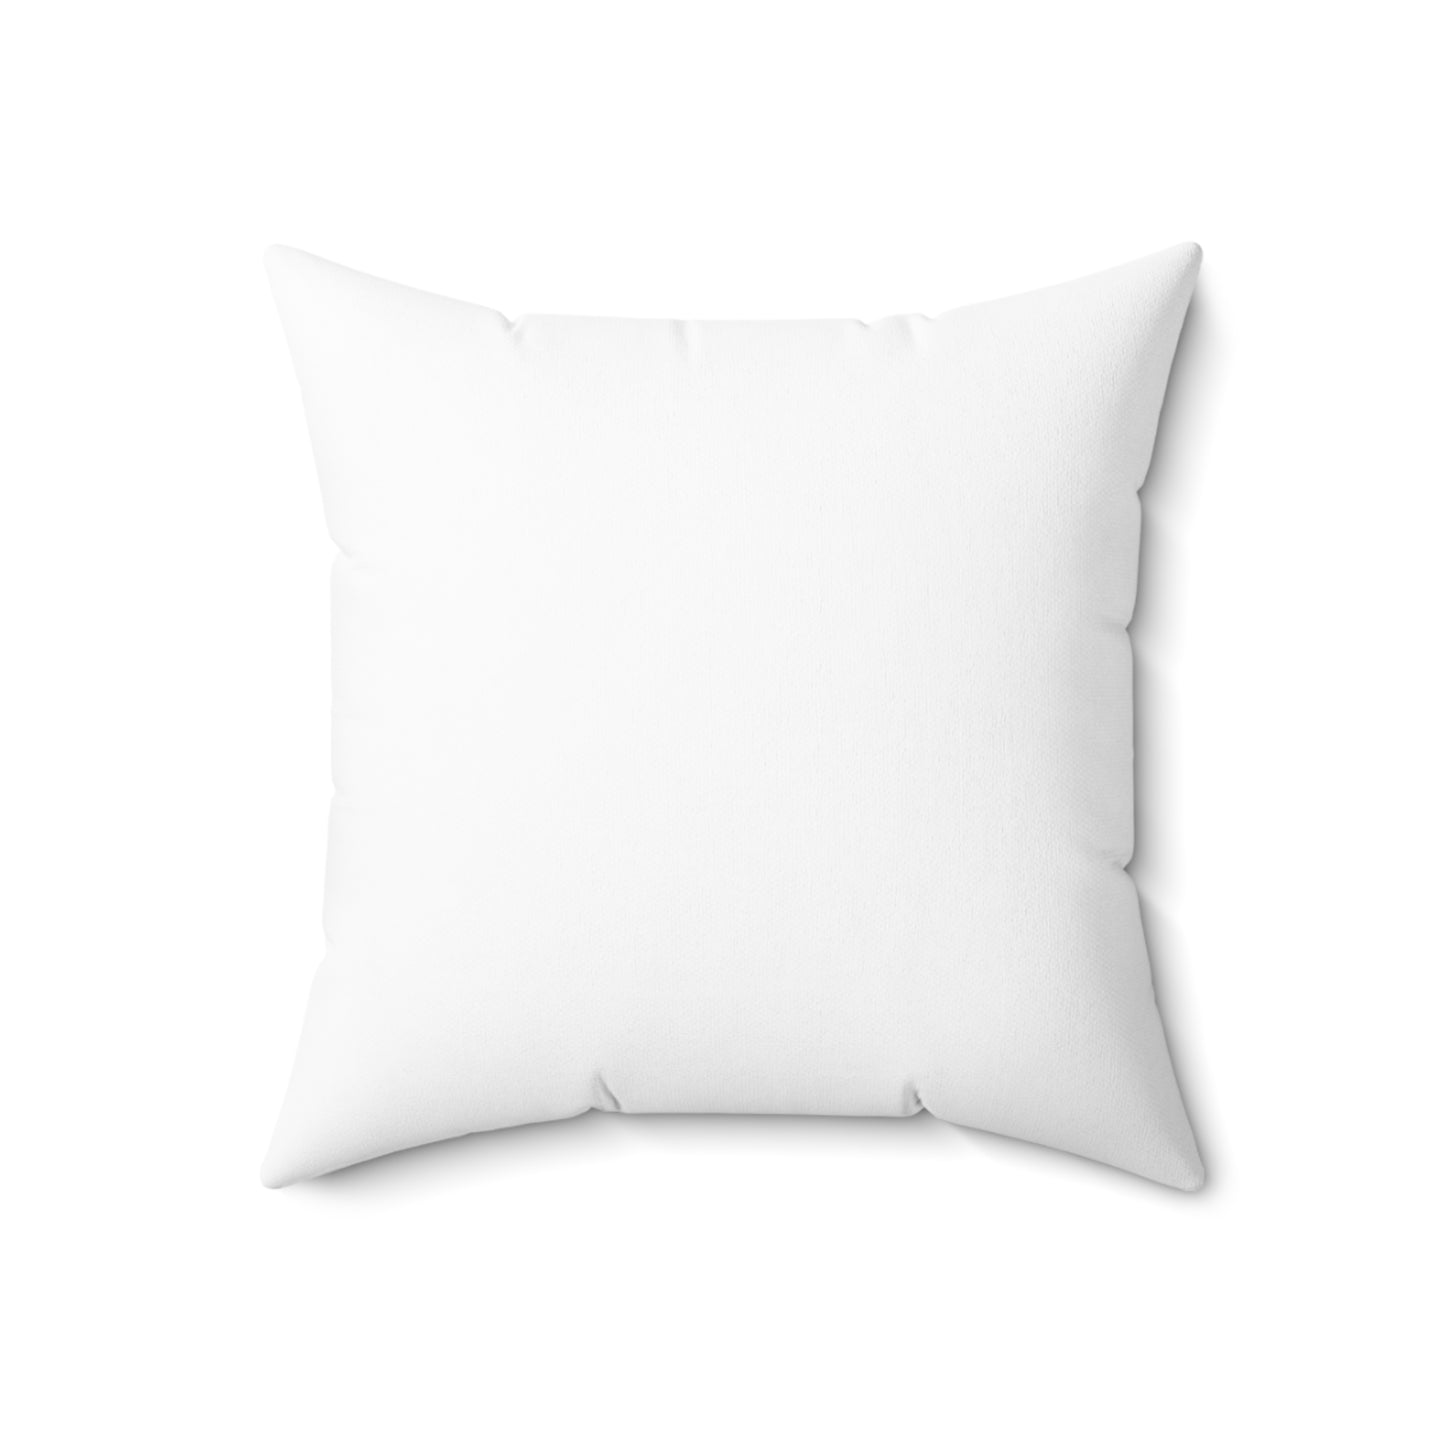 The Good Luck Spun Polyester Square Pillow 🍀